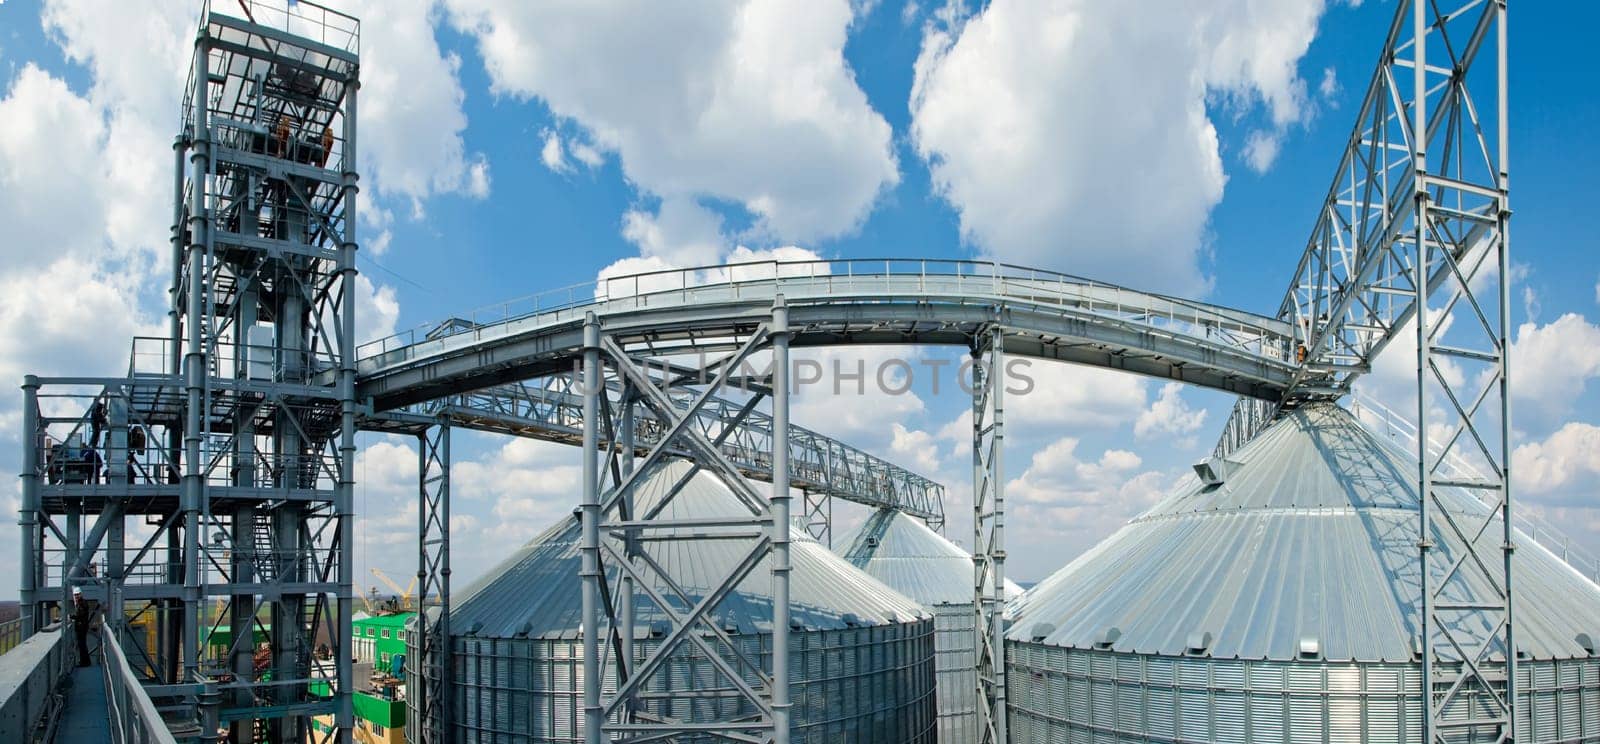 Grain elevator silos in Ukraine by sarymsakov